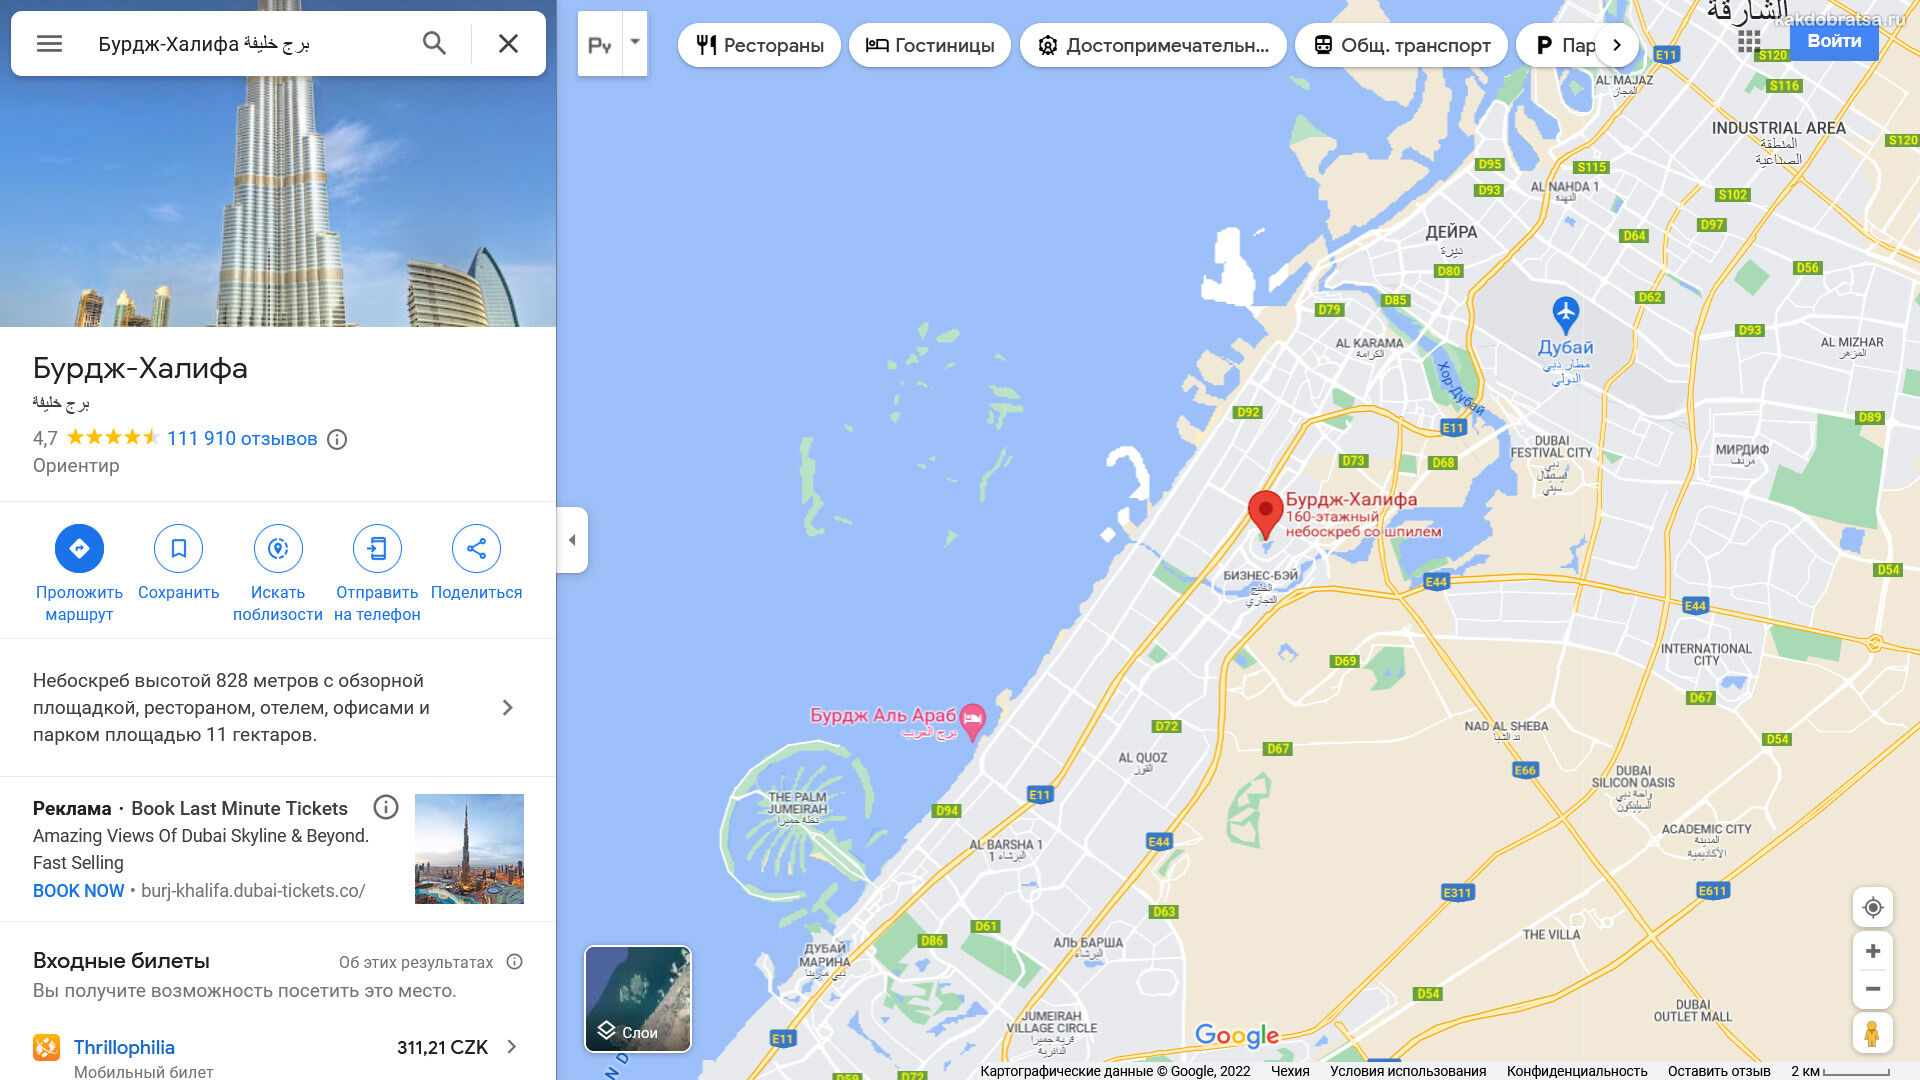 Бурдж халифа на карте. Бурдж Халифа на карте Дубая. Дубай карта города. Аэропорты Дубая на карте. Где находится Бурдж Халифа на карте.